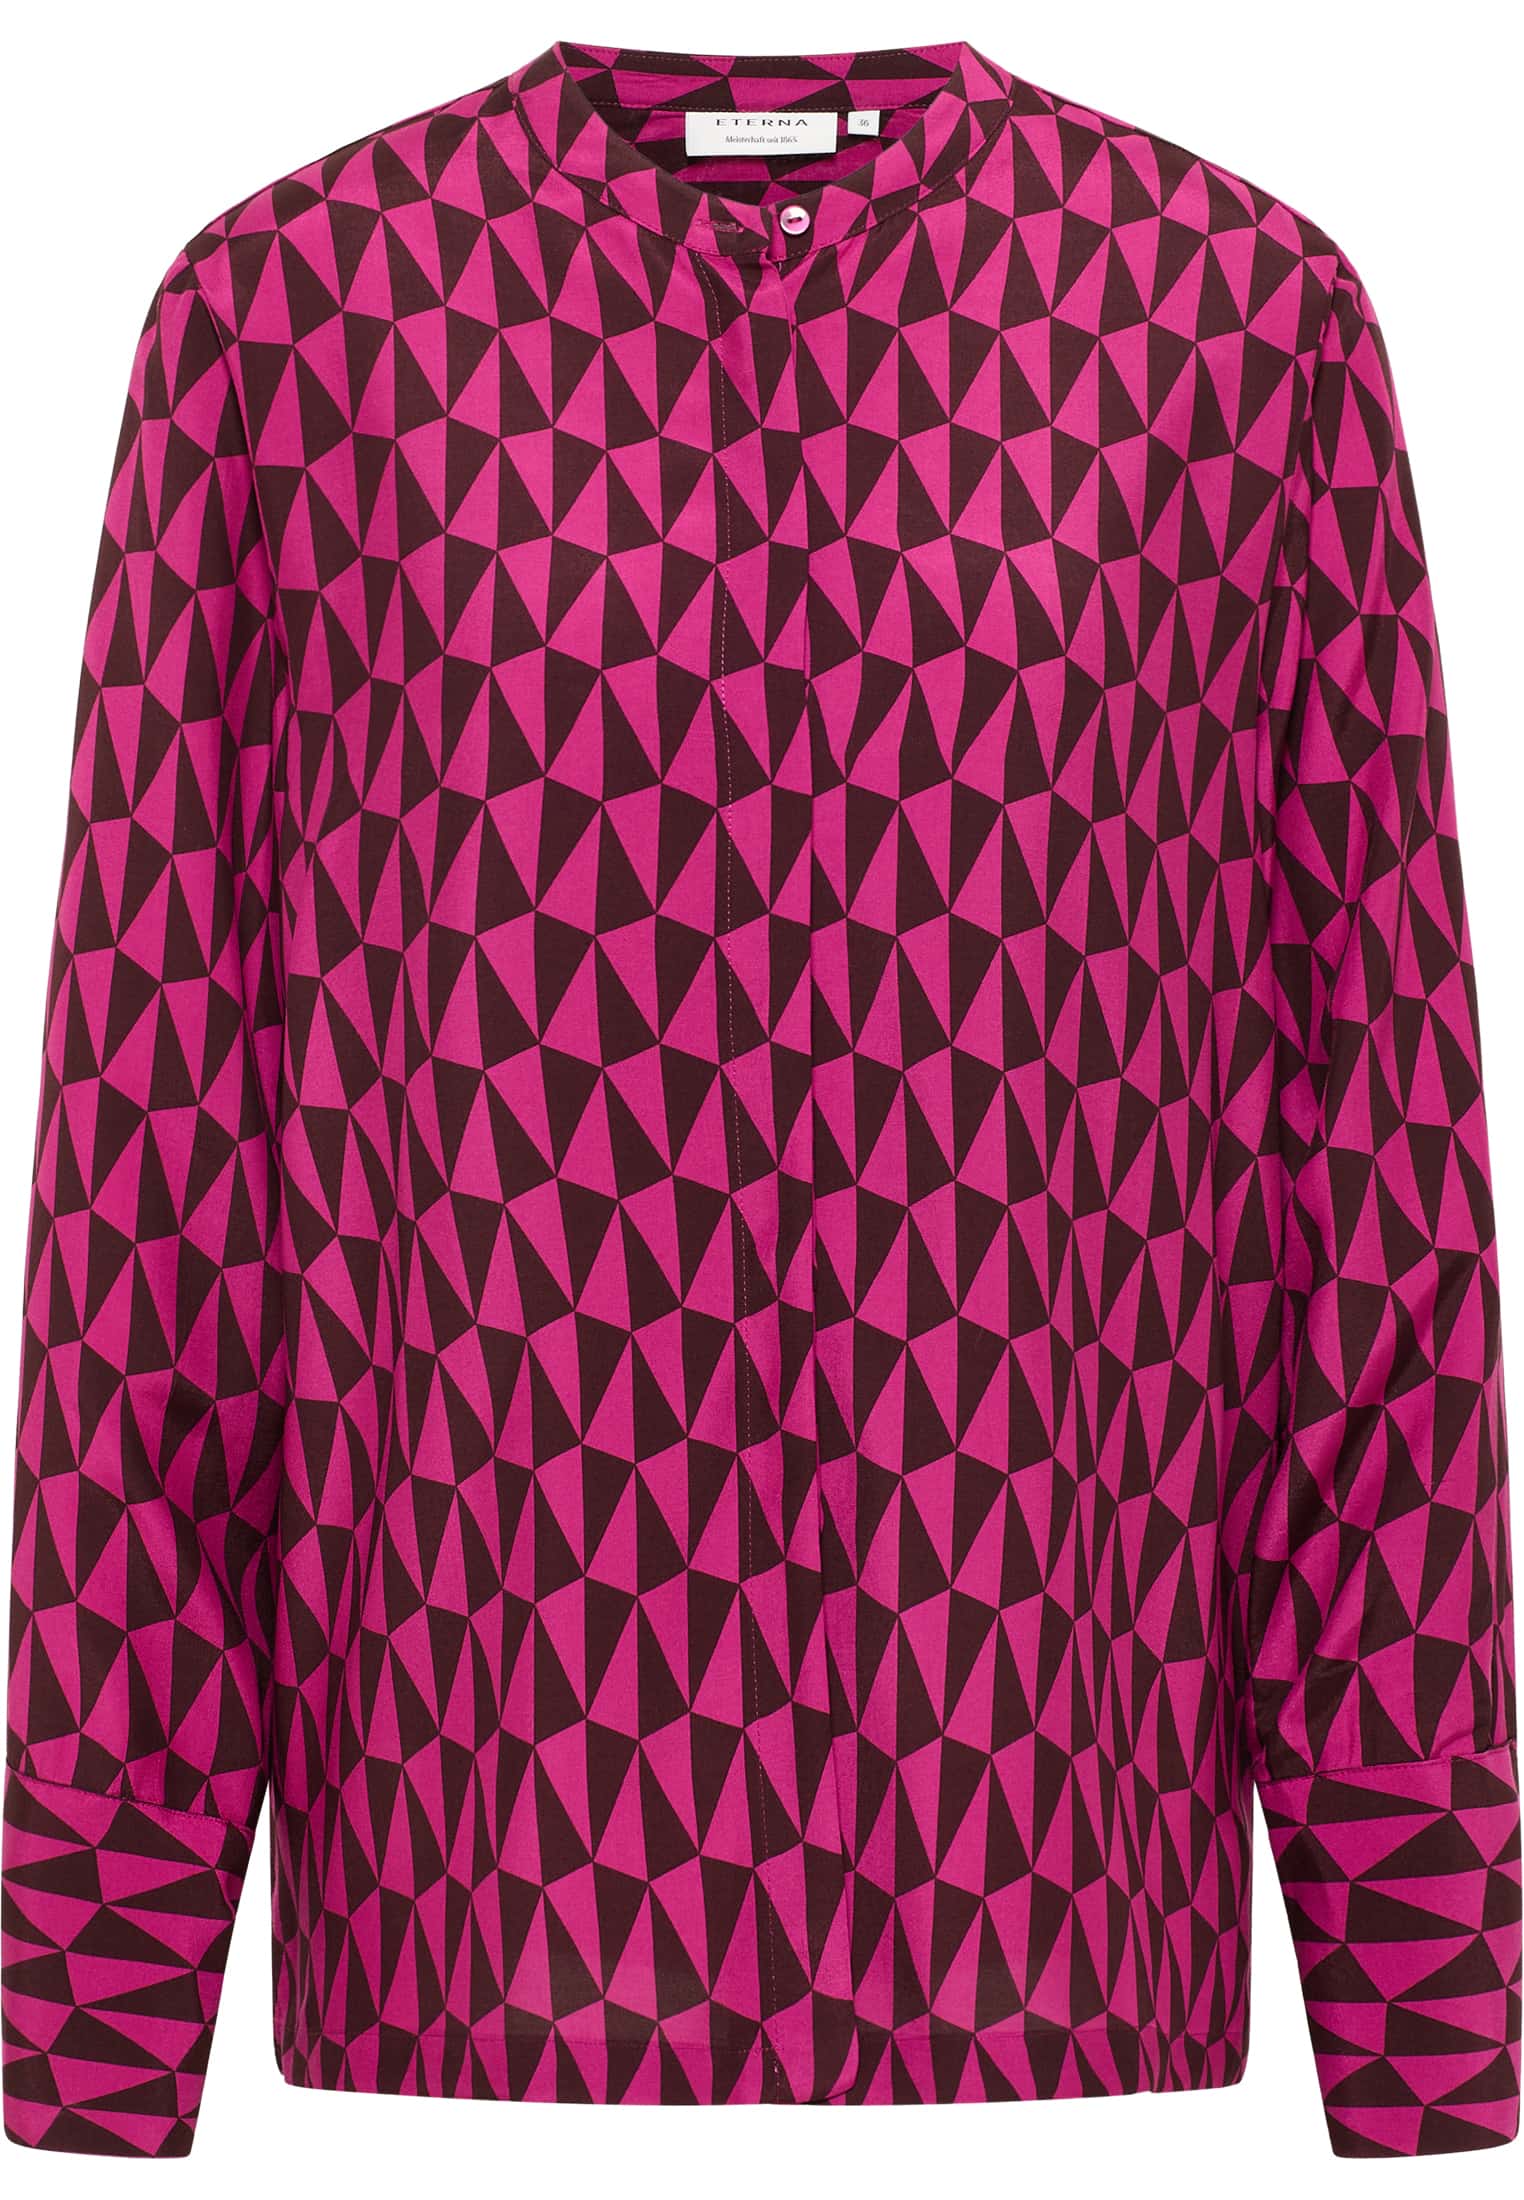 | | | 42 Langarm 2BL04250-15-21-42-1/1 in pink pink | bedruckt Blusenshirt